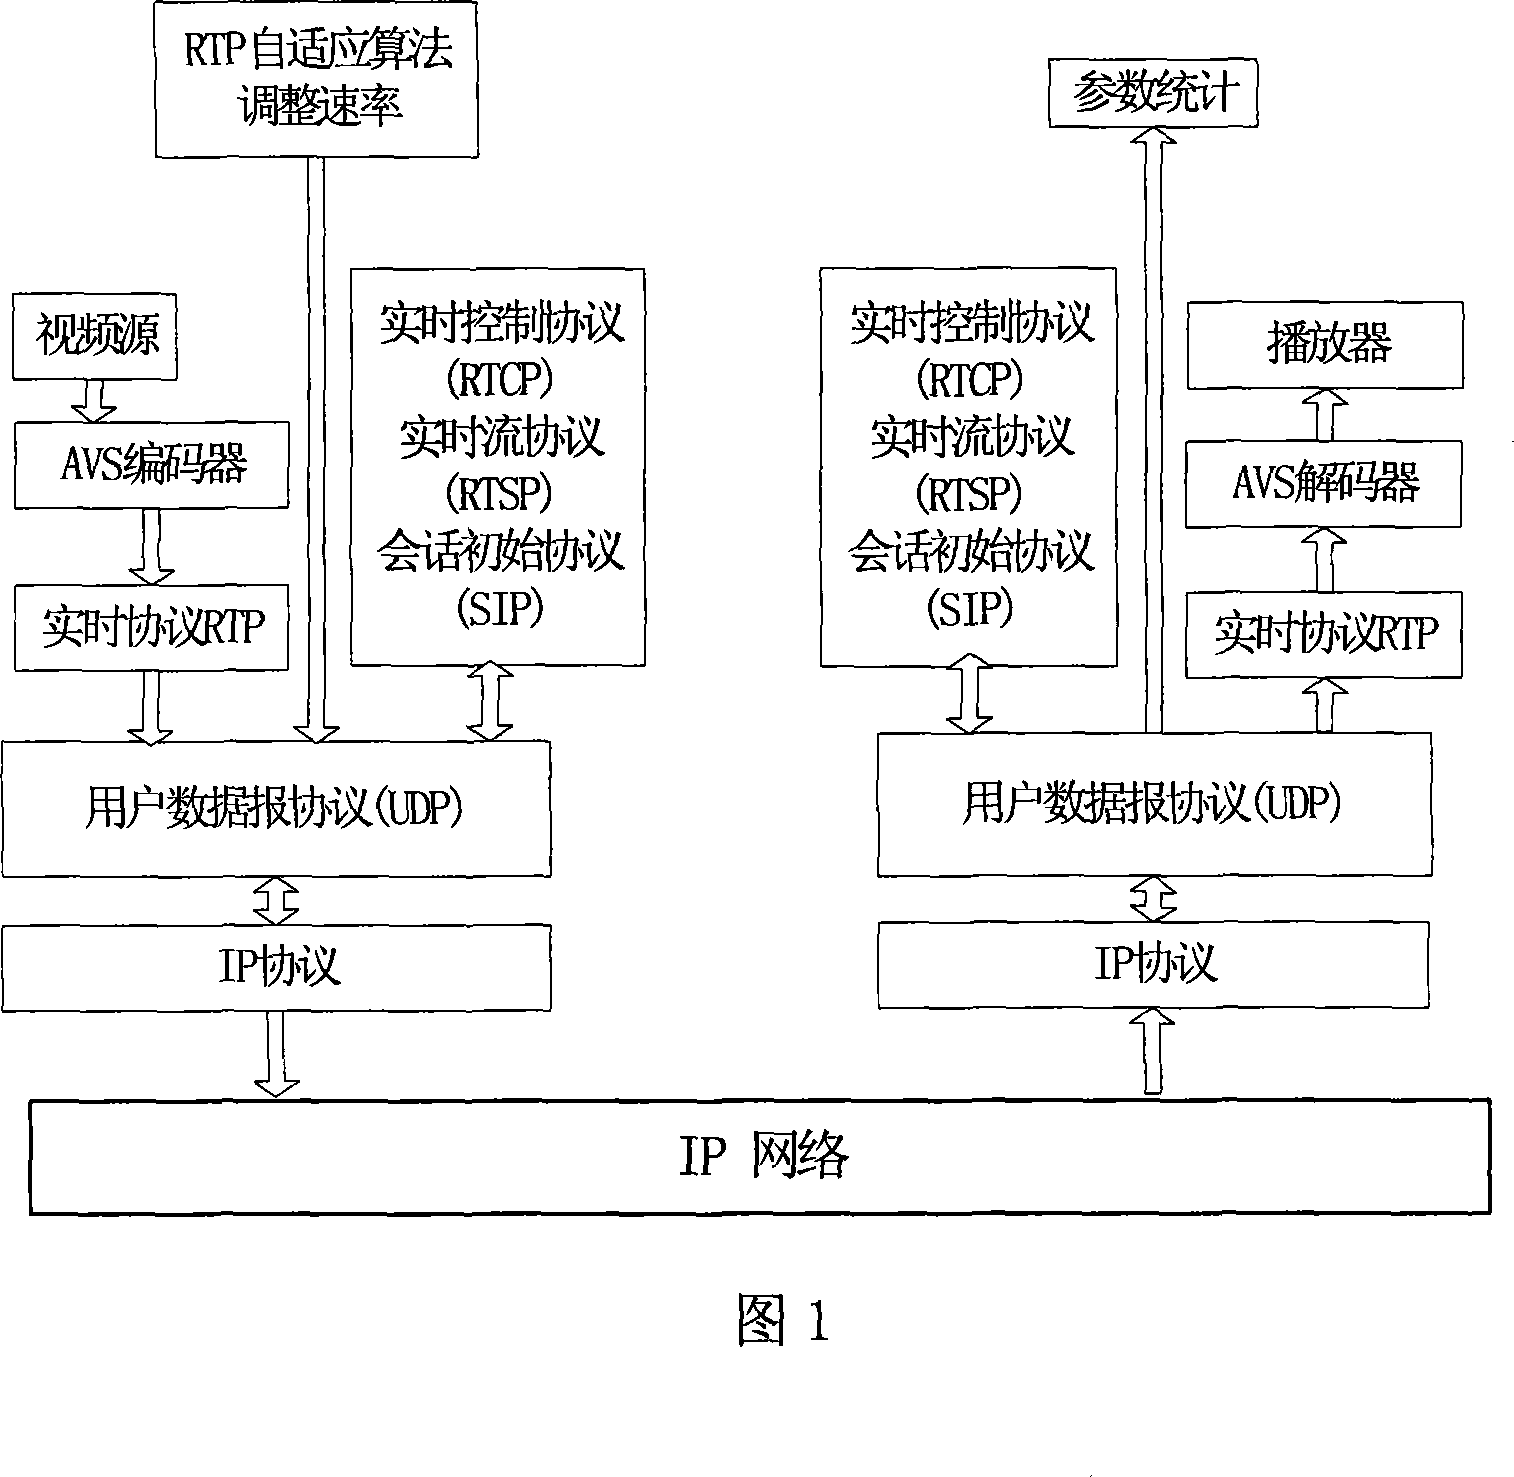 Method for controlling AVS fluid-medium transmission